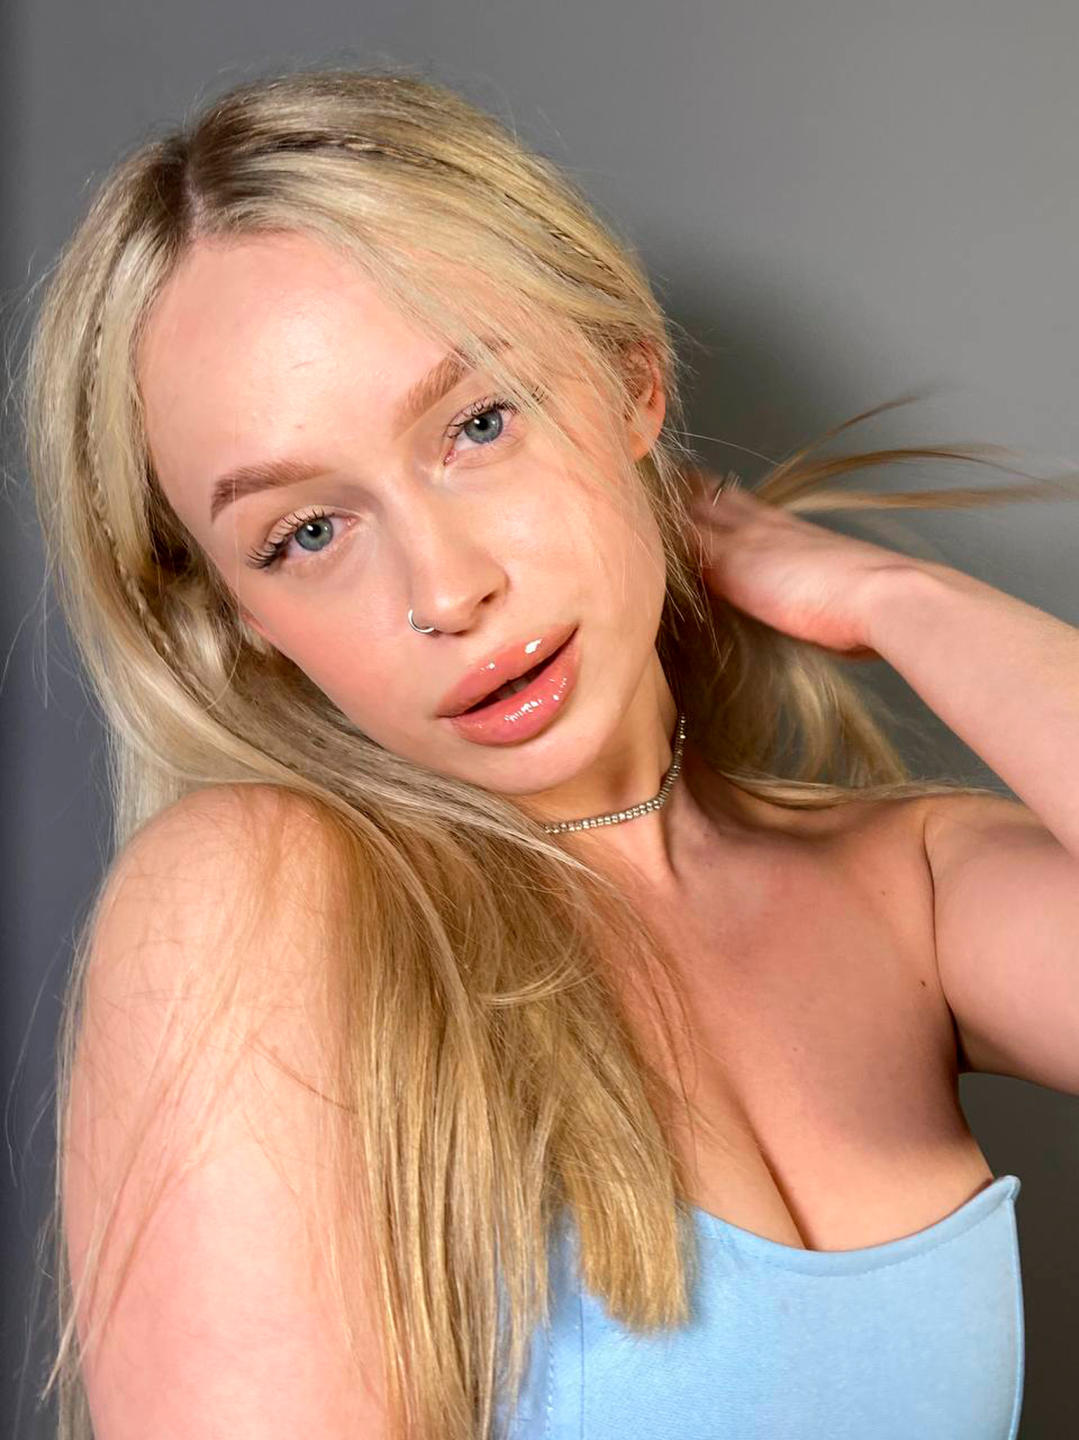 Image of cam model LolitaRosi from XloveCam